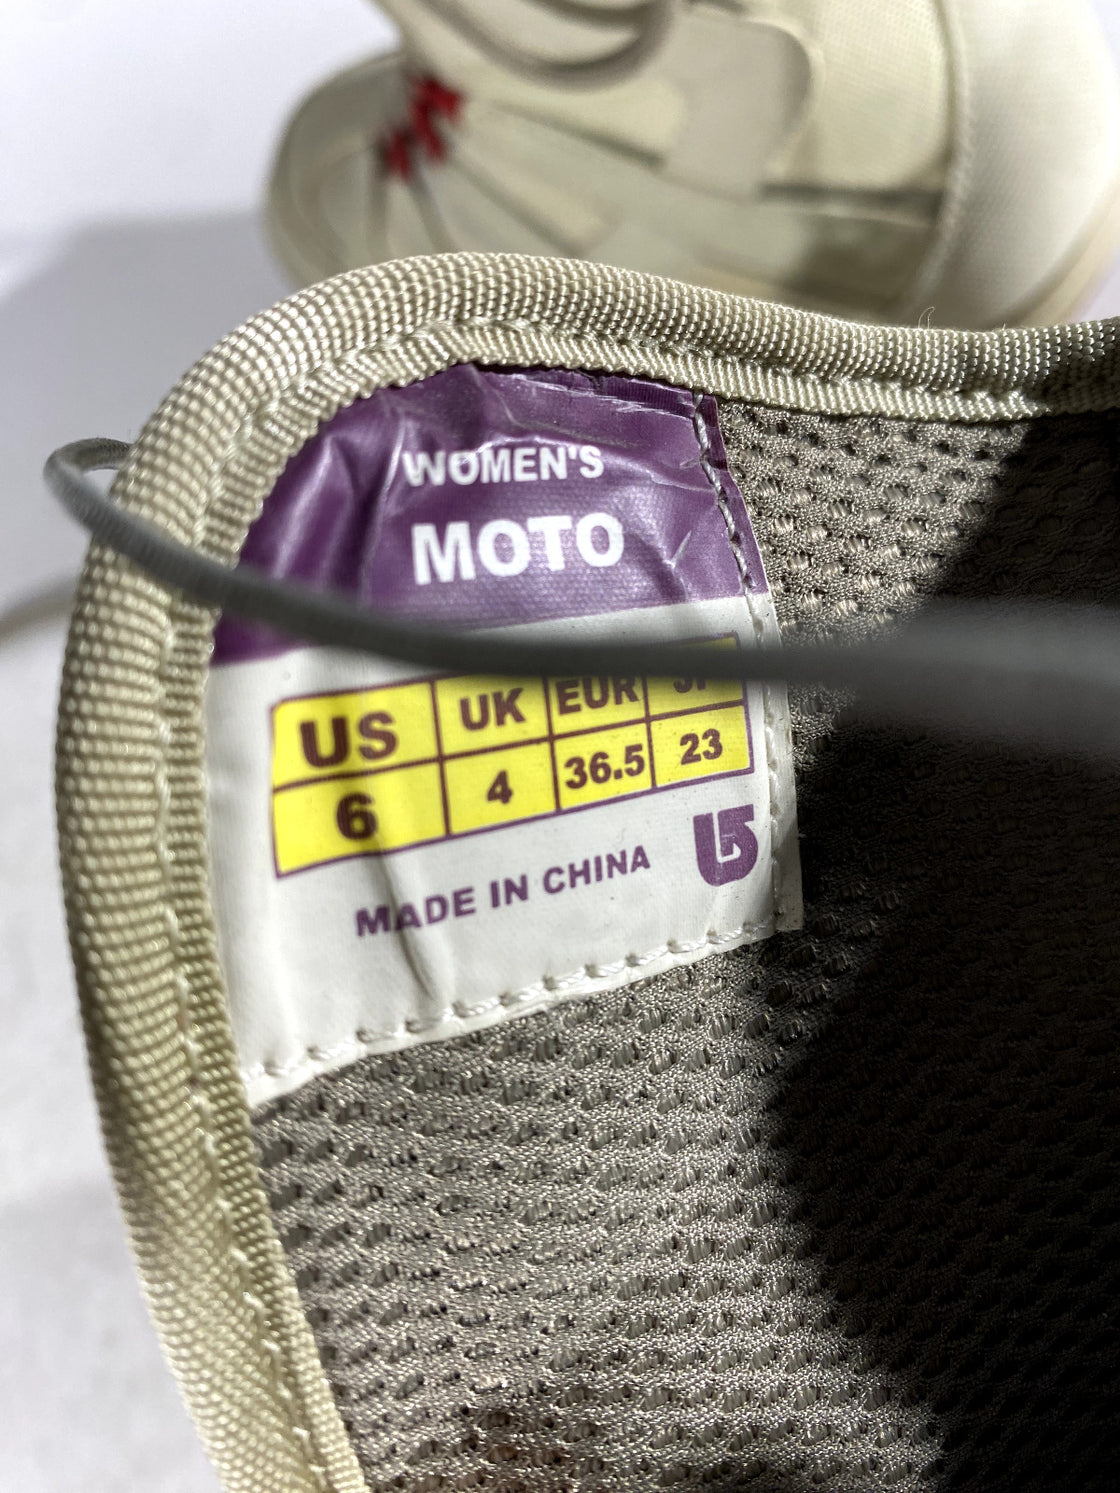 BURTON Moto Snowboard Boots Ladies Size EU36.5 US6 UK4, Mondo 240 mm